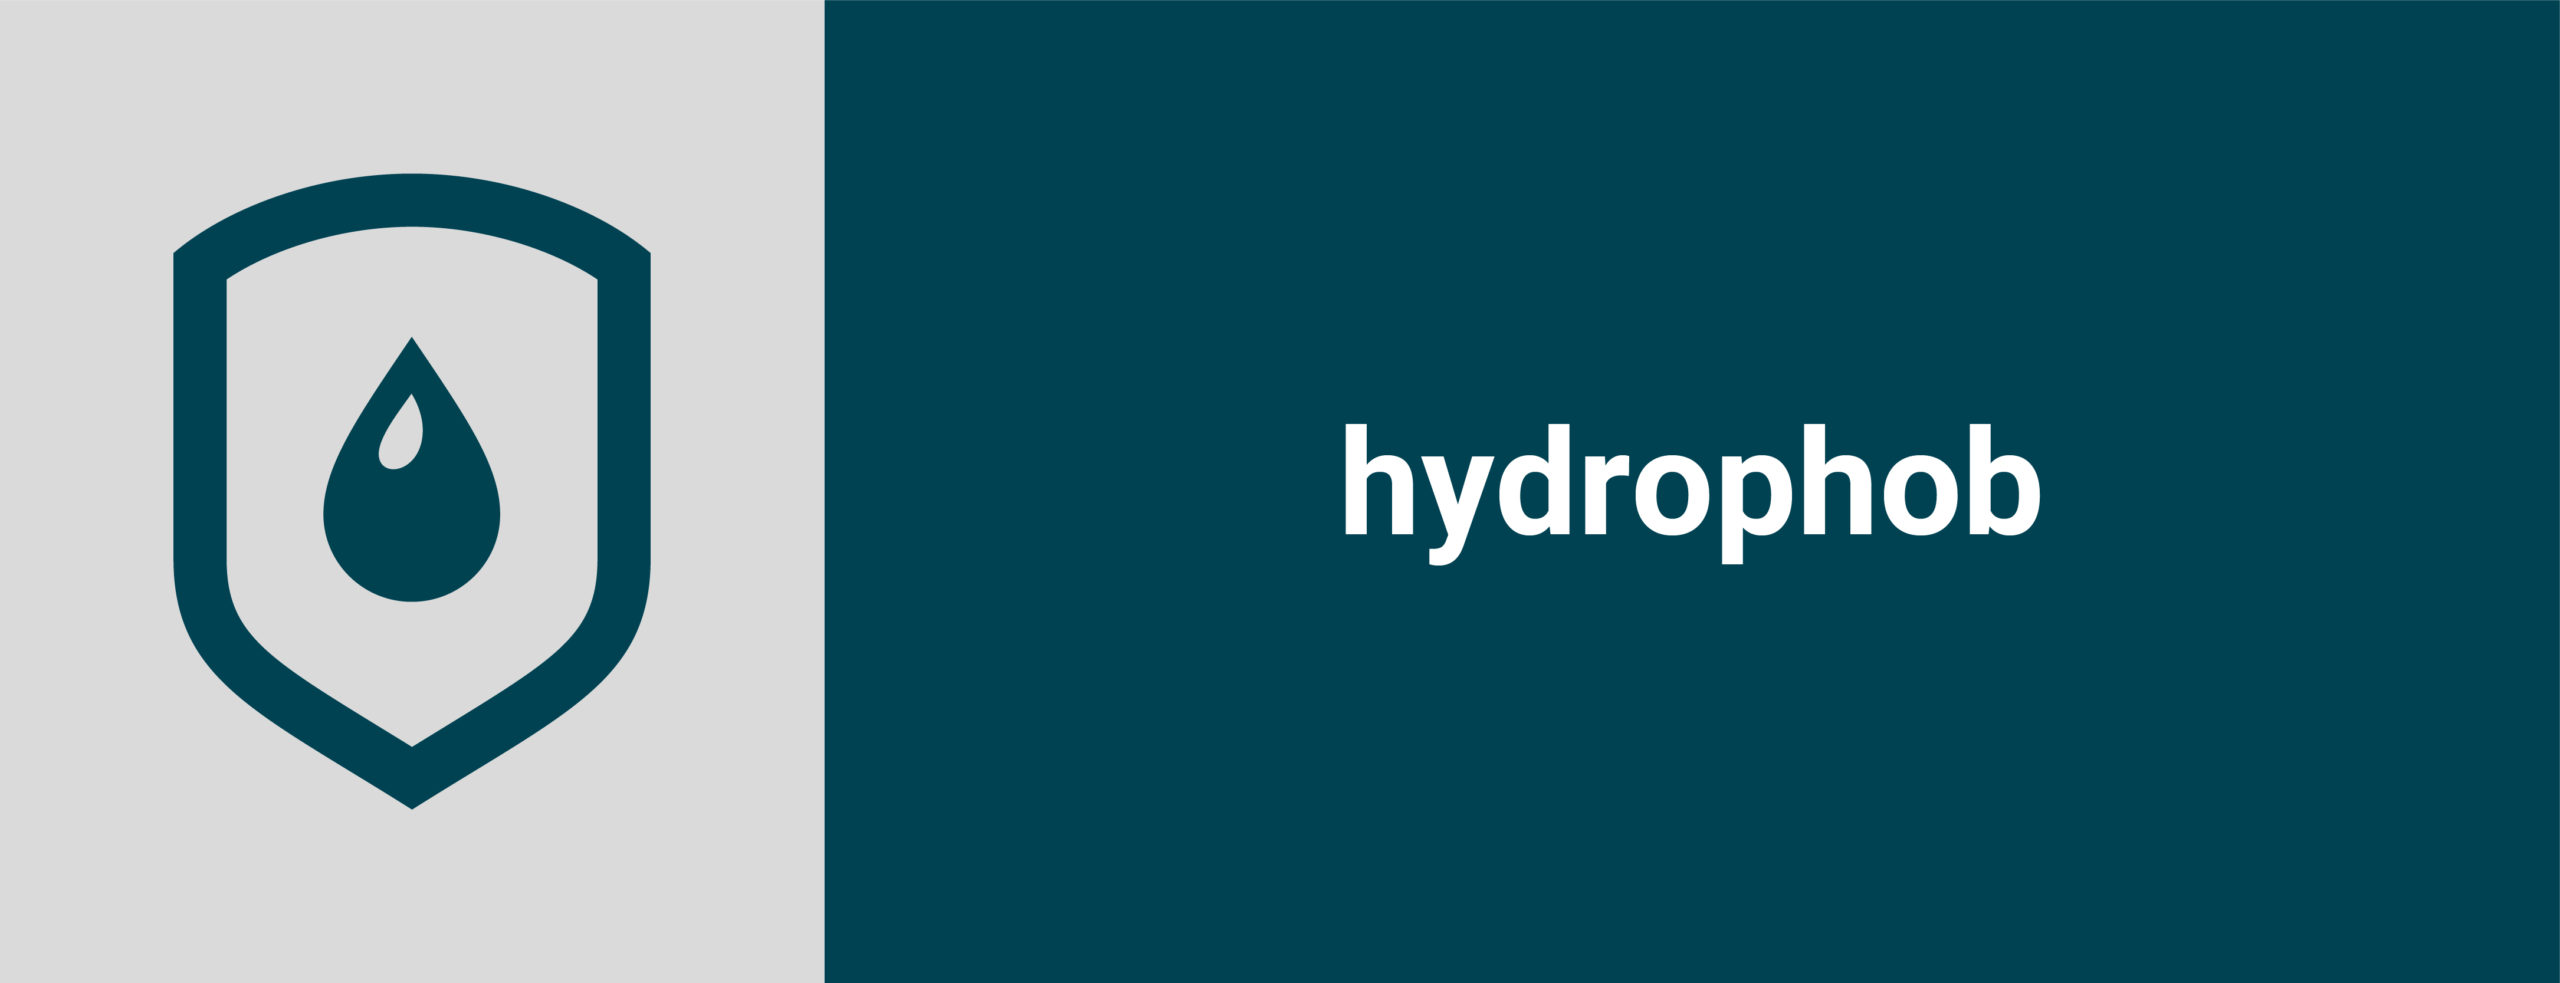 hydrophob